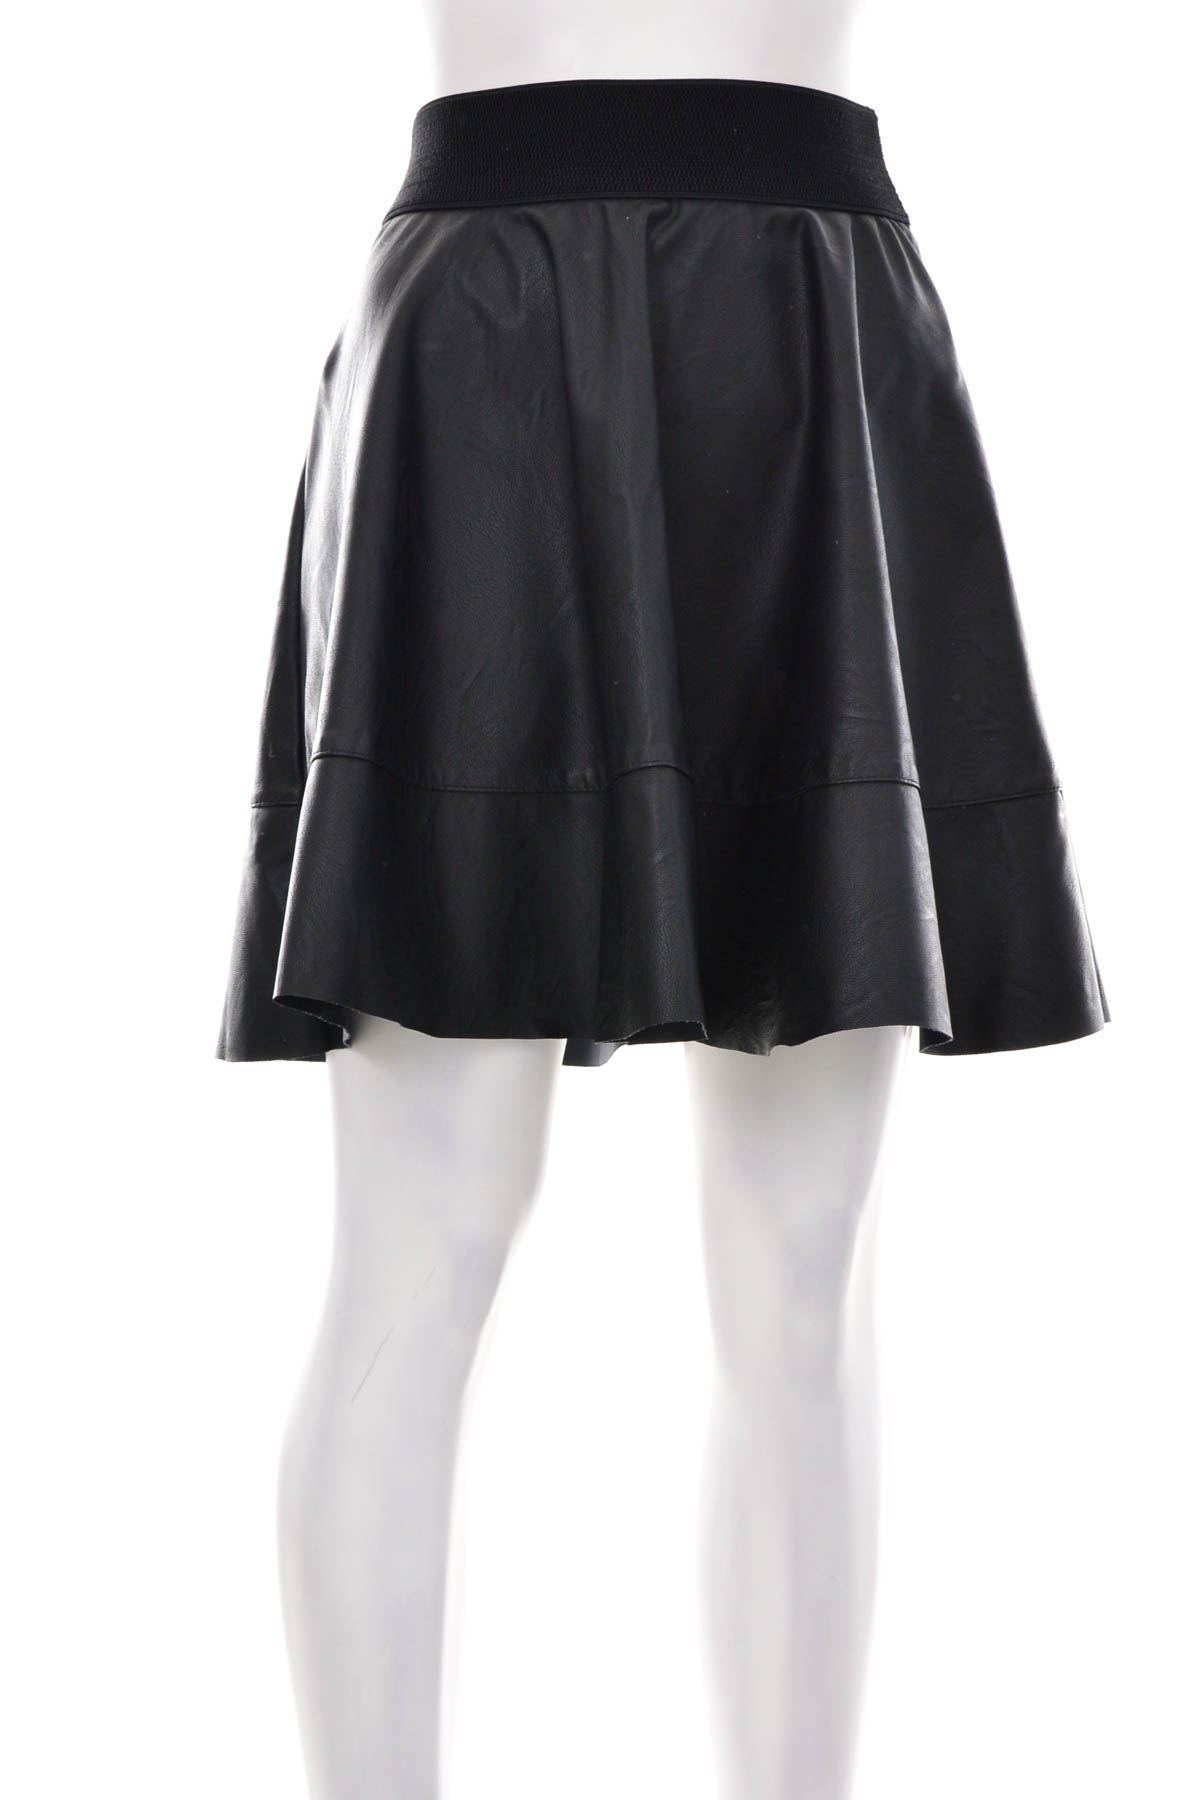 Leather skirt - SassyClassy - 0